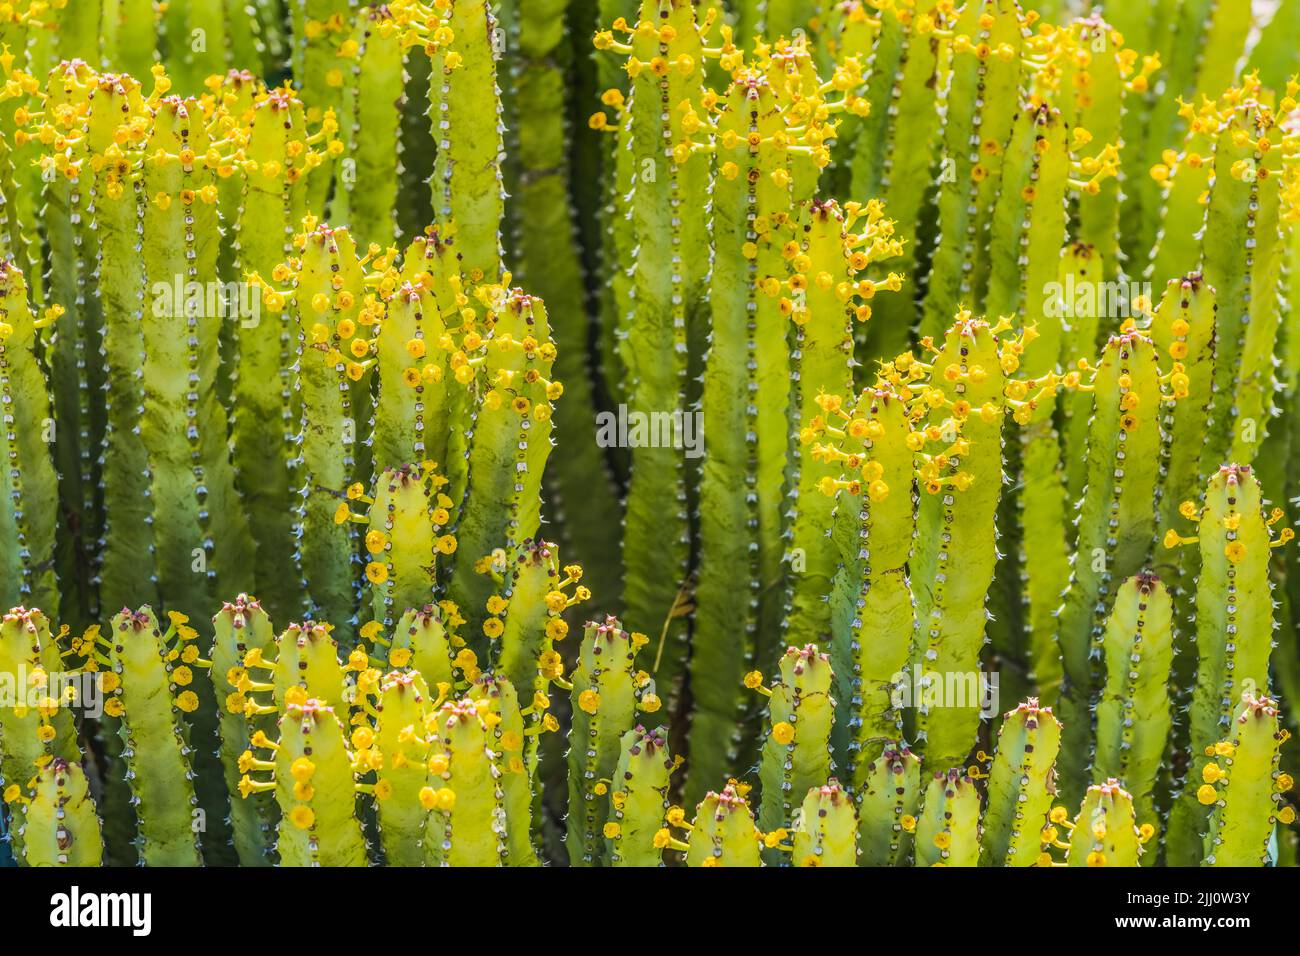 Euphorbia Resinifera African Spurge Cactus Yellow Flowers Desert Botanical Garden Tucson Arizona Cctus native to Morocco Garden created in the 1960s Stock Photo